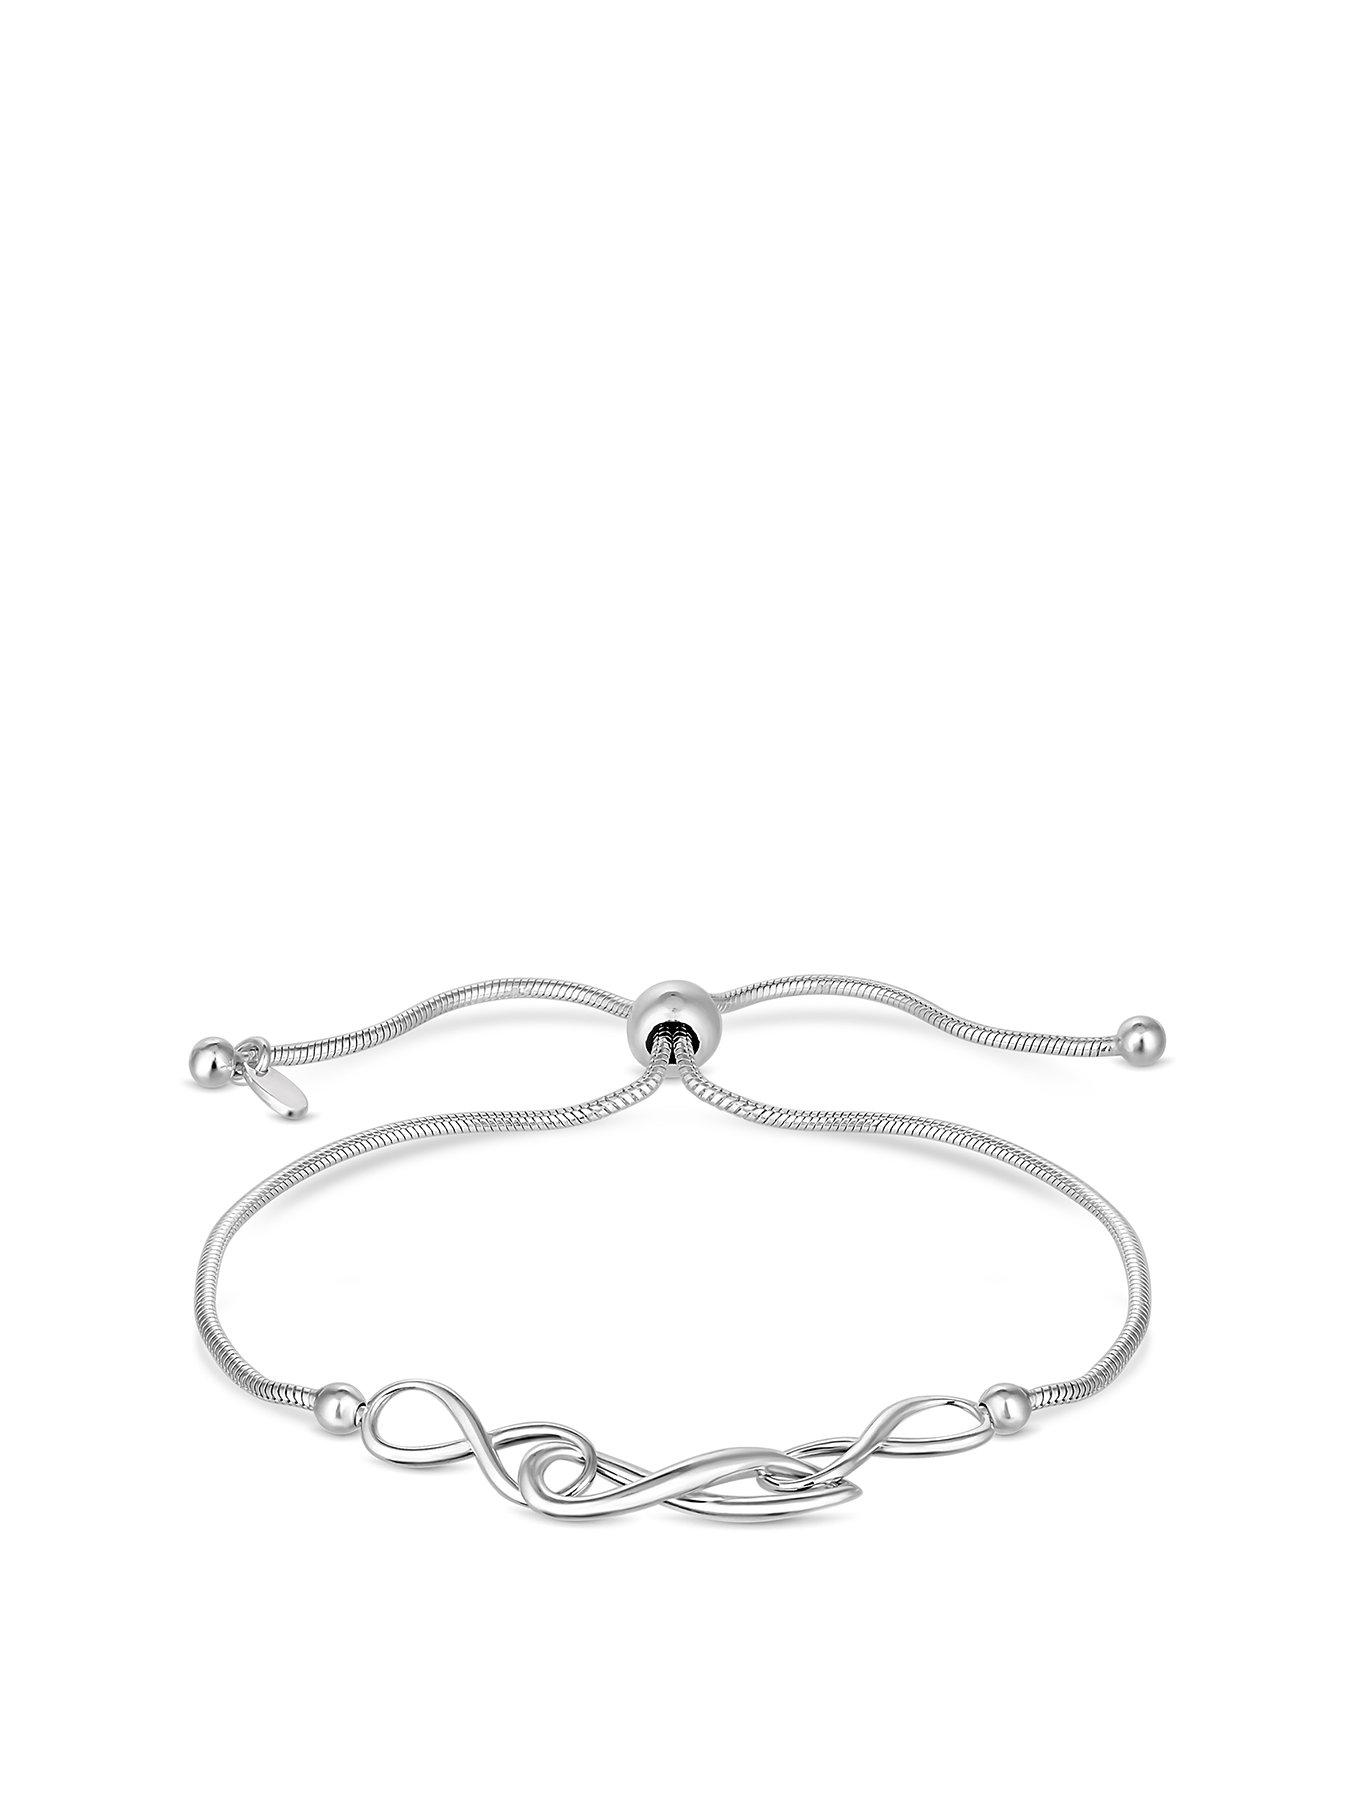 Sterling Silver | Bracelets Very jewellery Gifts | Ireland & 